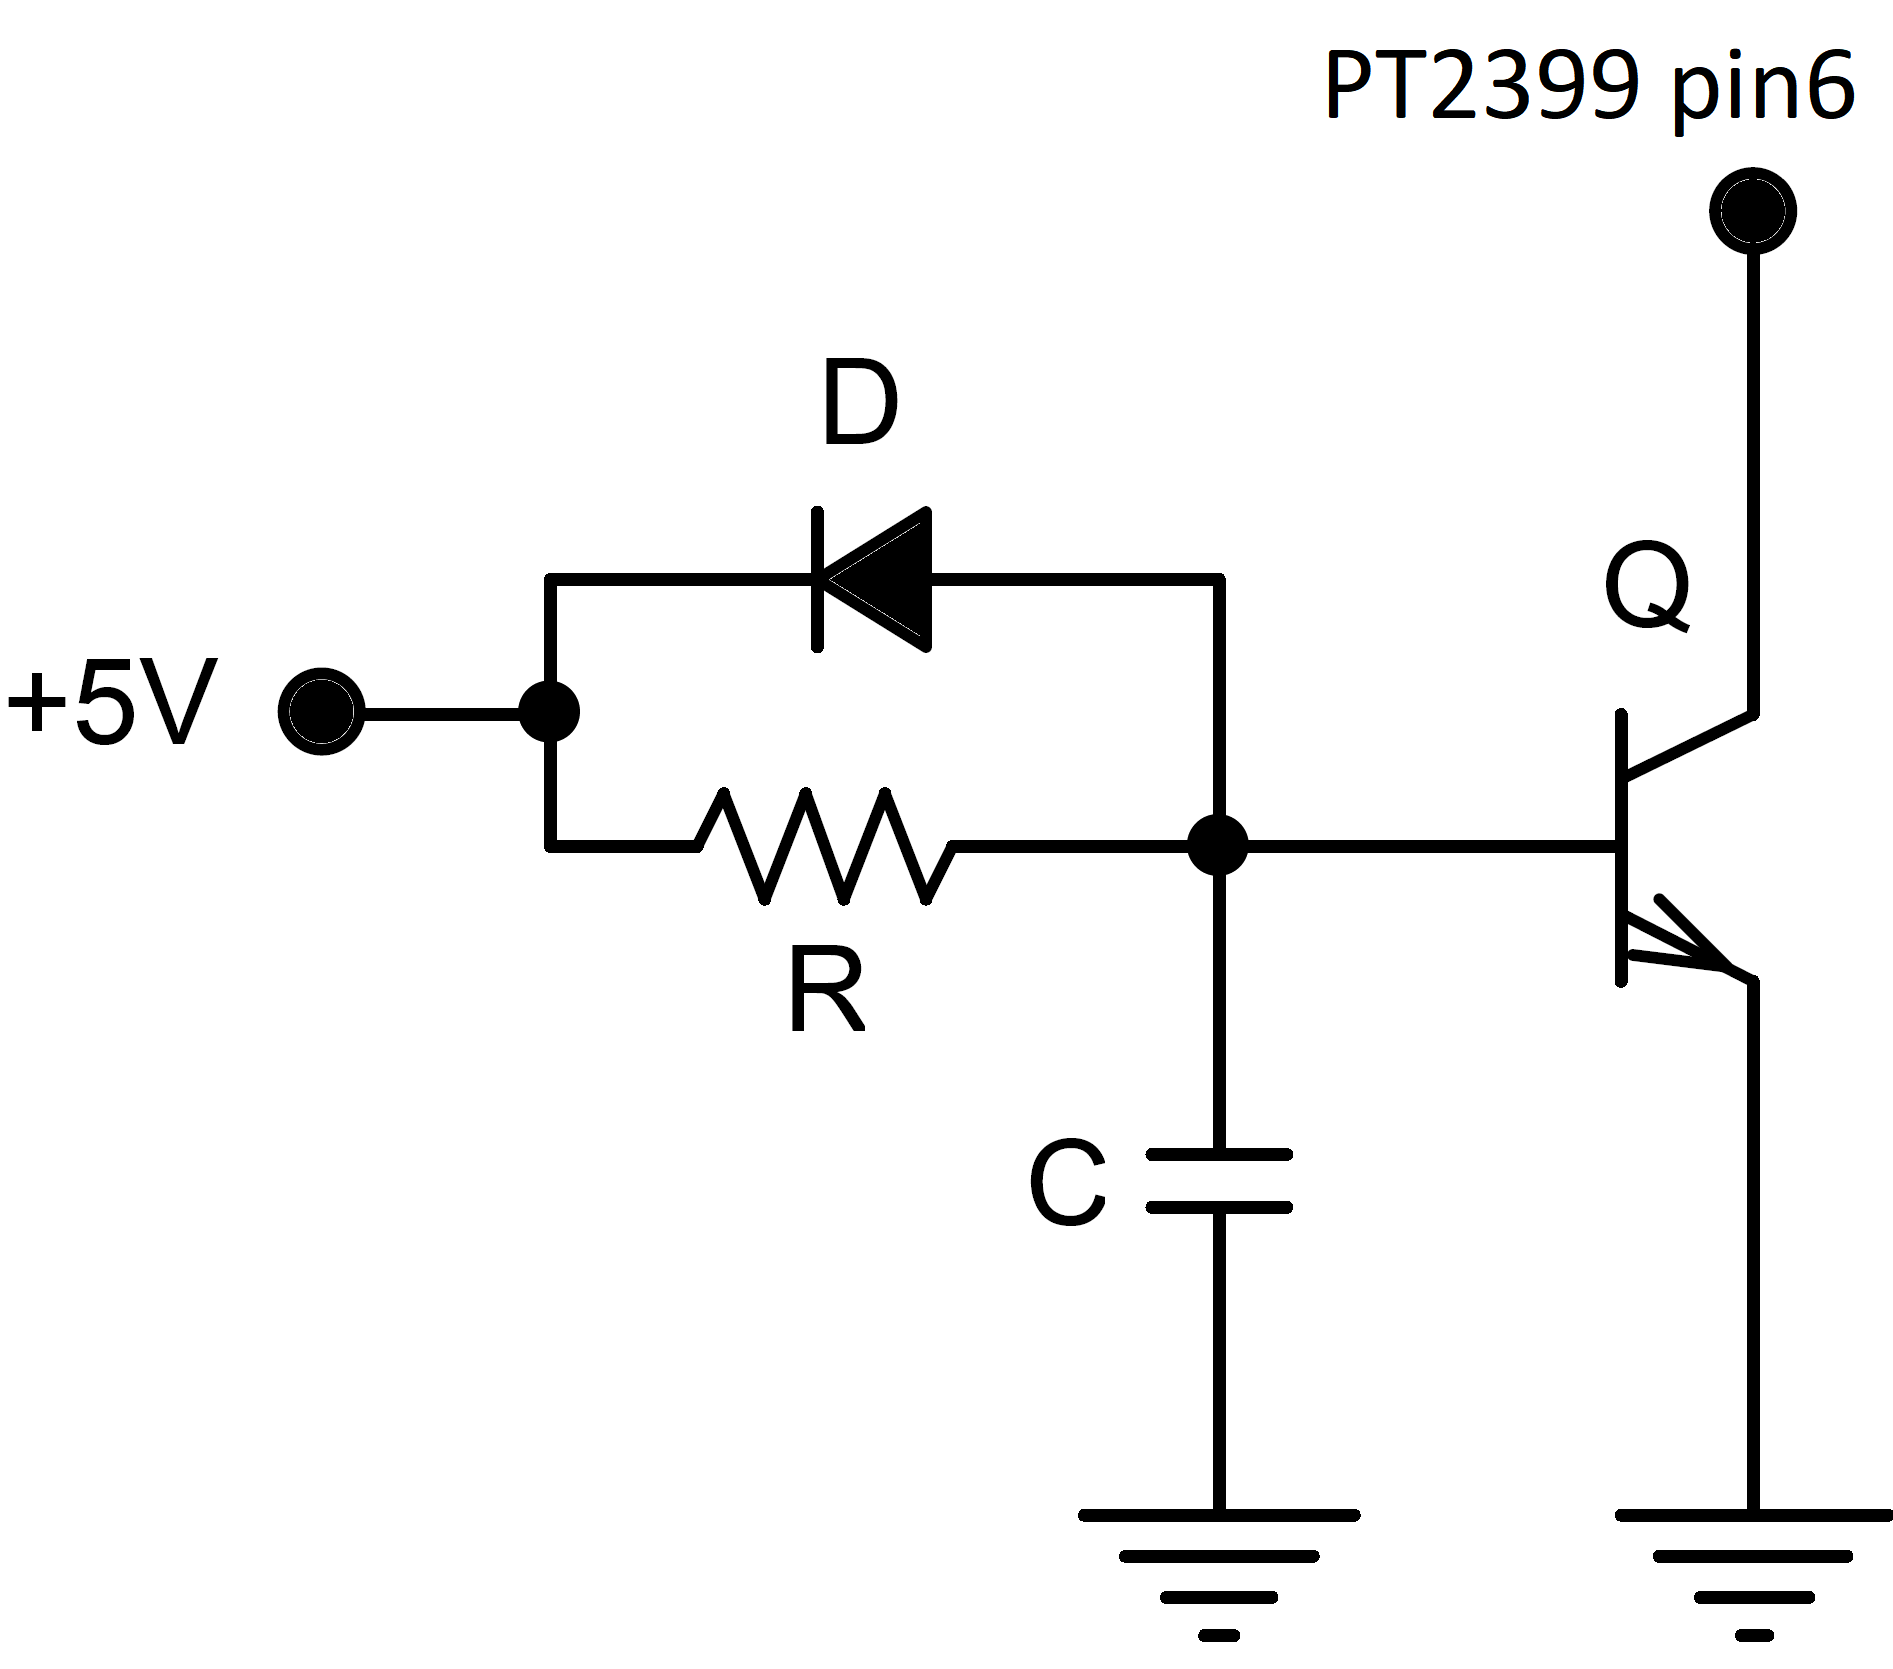 pt2399 latch up circuit